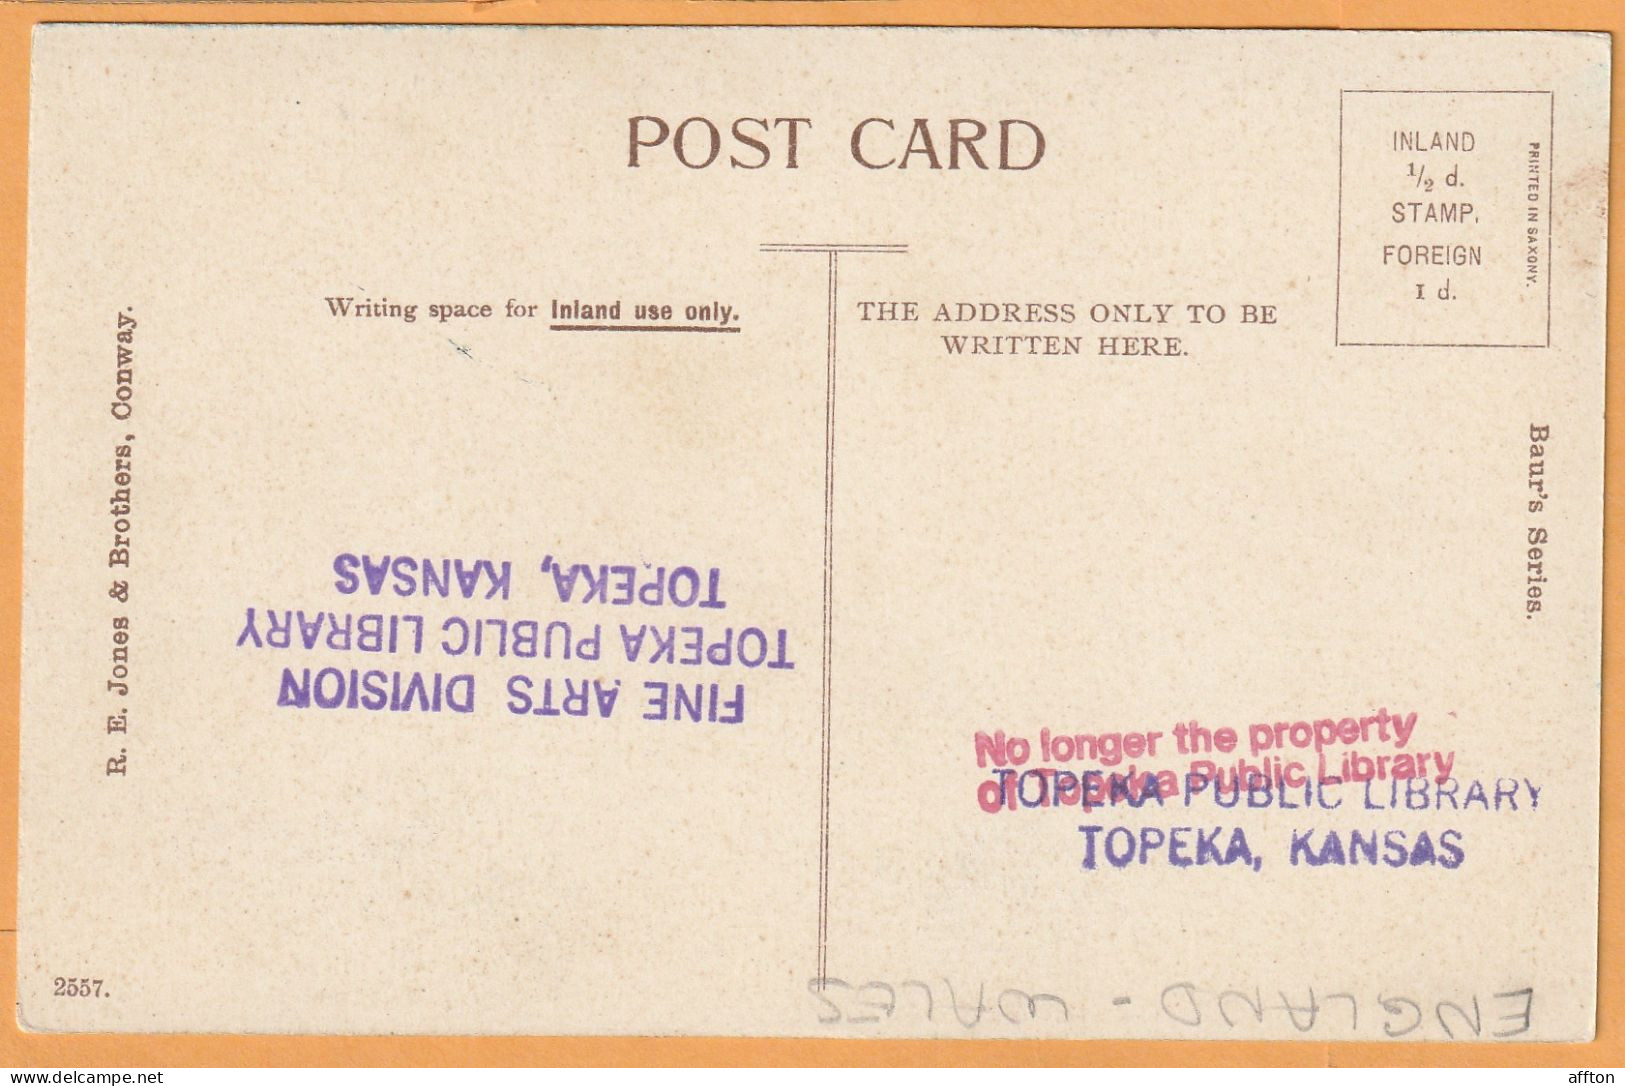 Holyhead UK 1908 Postcard - Anglesey